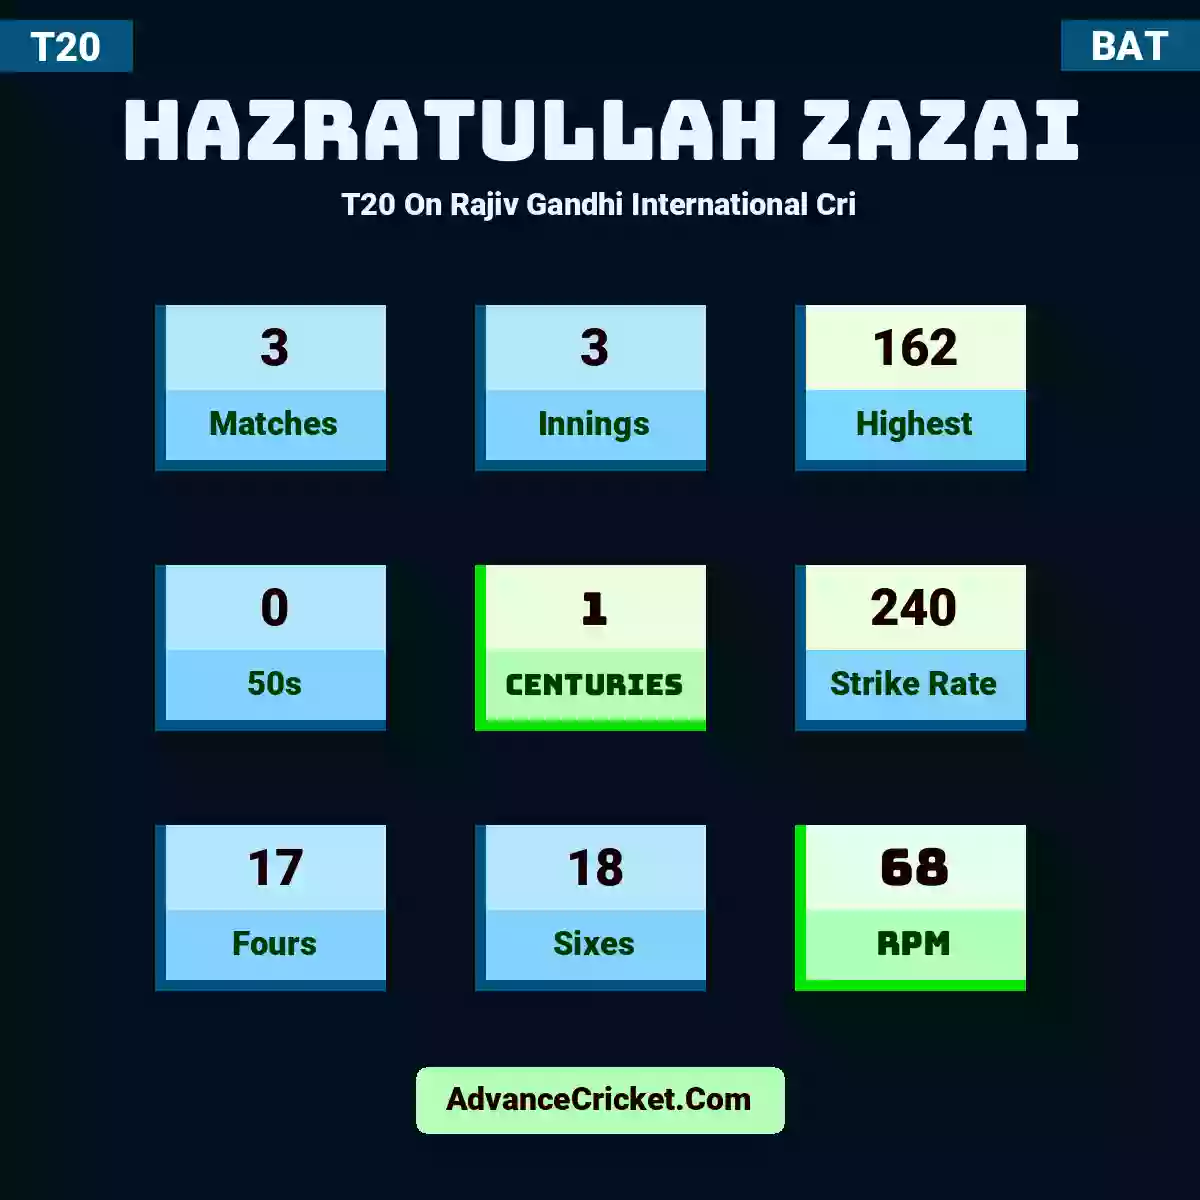 Hazratullah Zazai T20  On Rajiv Gandhi International Cri, Hazratullah Zazai played 3 matches, scored 162 runs as highest, 0 half-centuries, and 1 centuries, with a strike rate of 240. H.Zazai hit 17 fours and 18 sixes, with an RPM of 68.